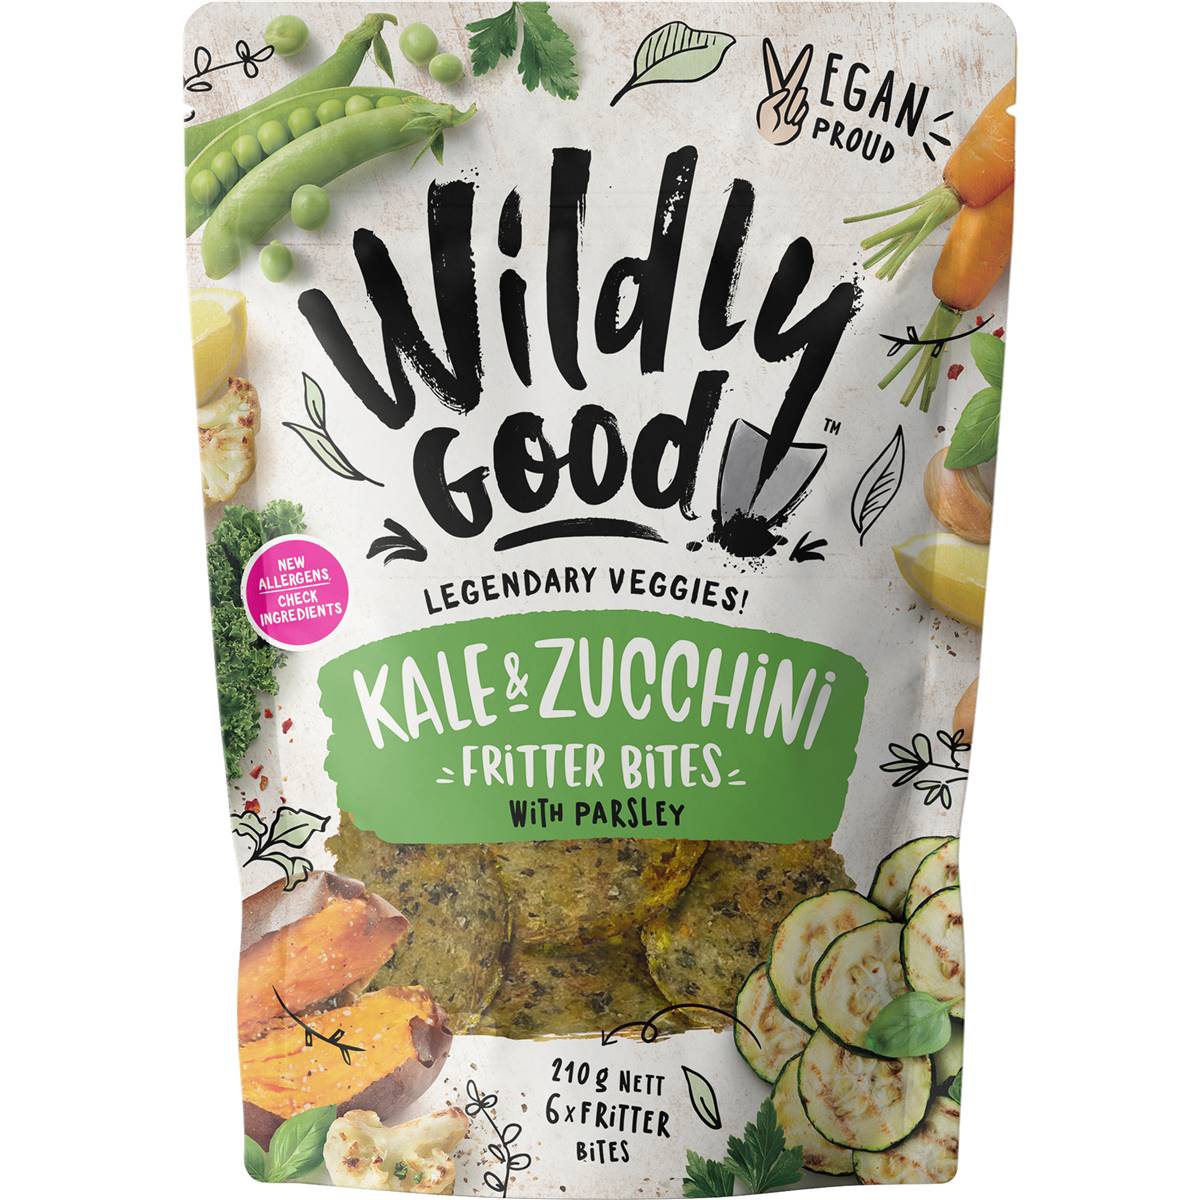 Calories in Wildly Good Kale & Zucchini Veggie Fritter Bites